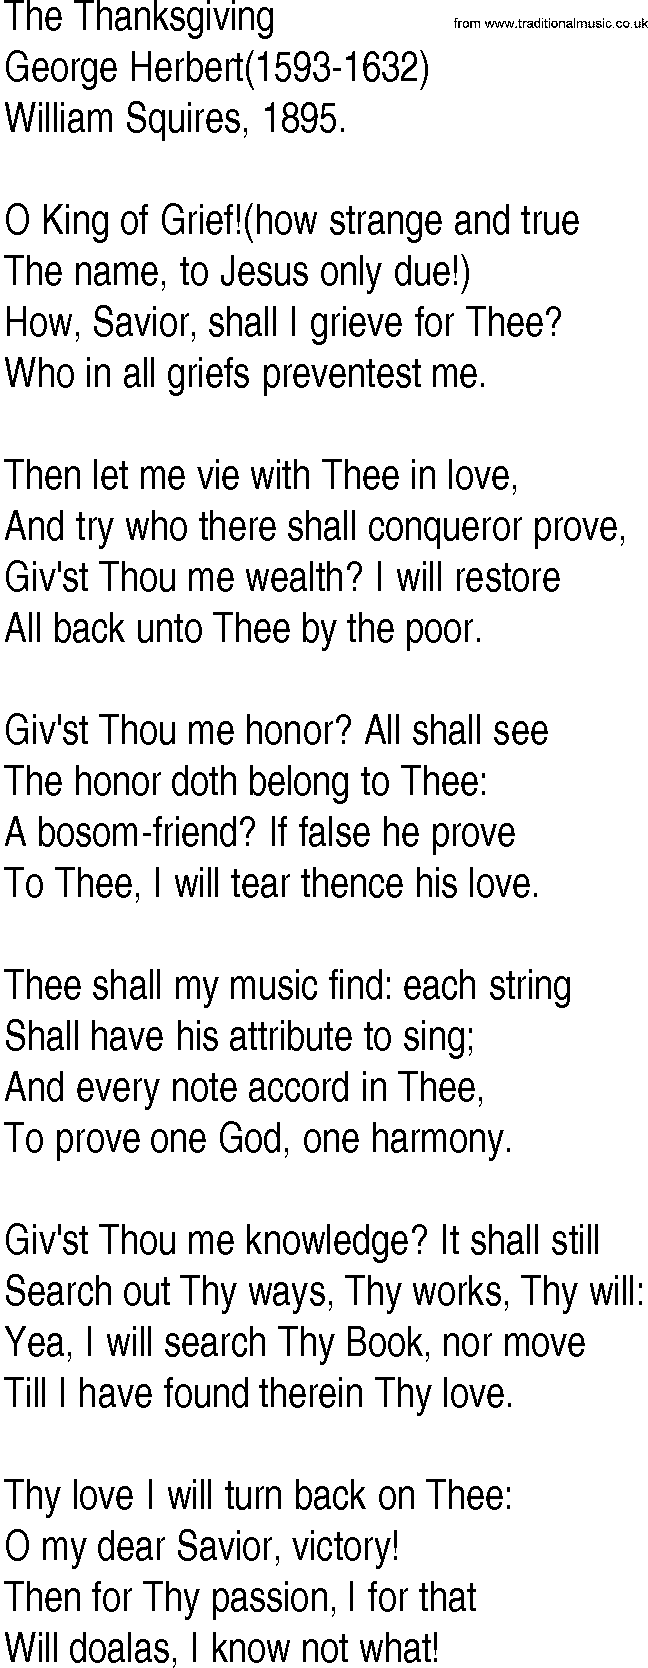 Hymn and Gospel Song: The Thanksgiving by George Herbert lyrics